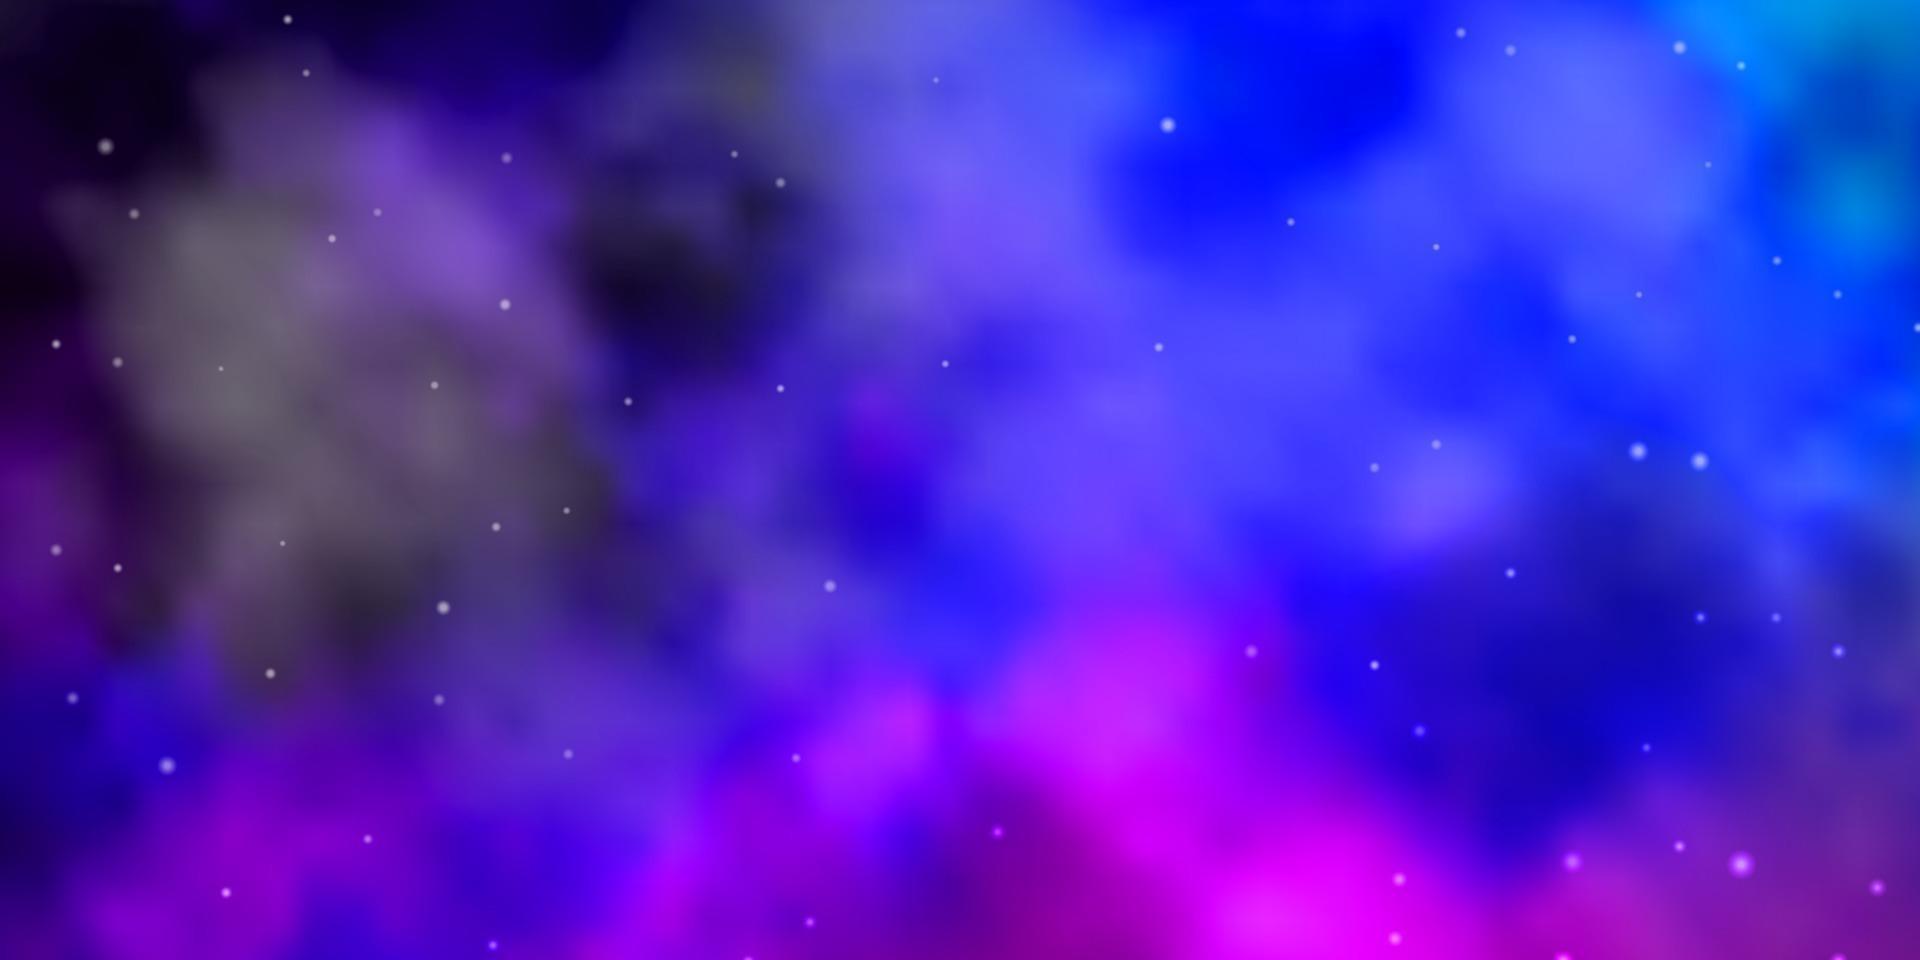 layout de vetor rosa escuro, azul com estrelas brilhantes.